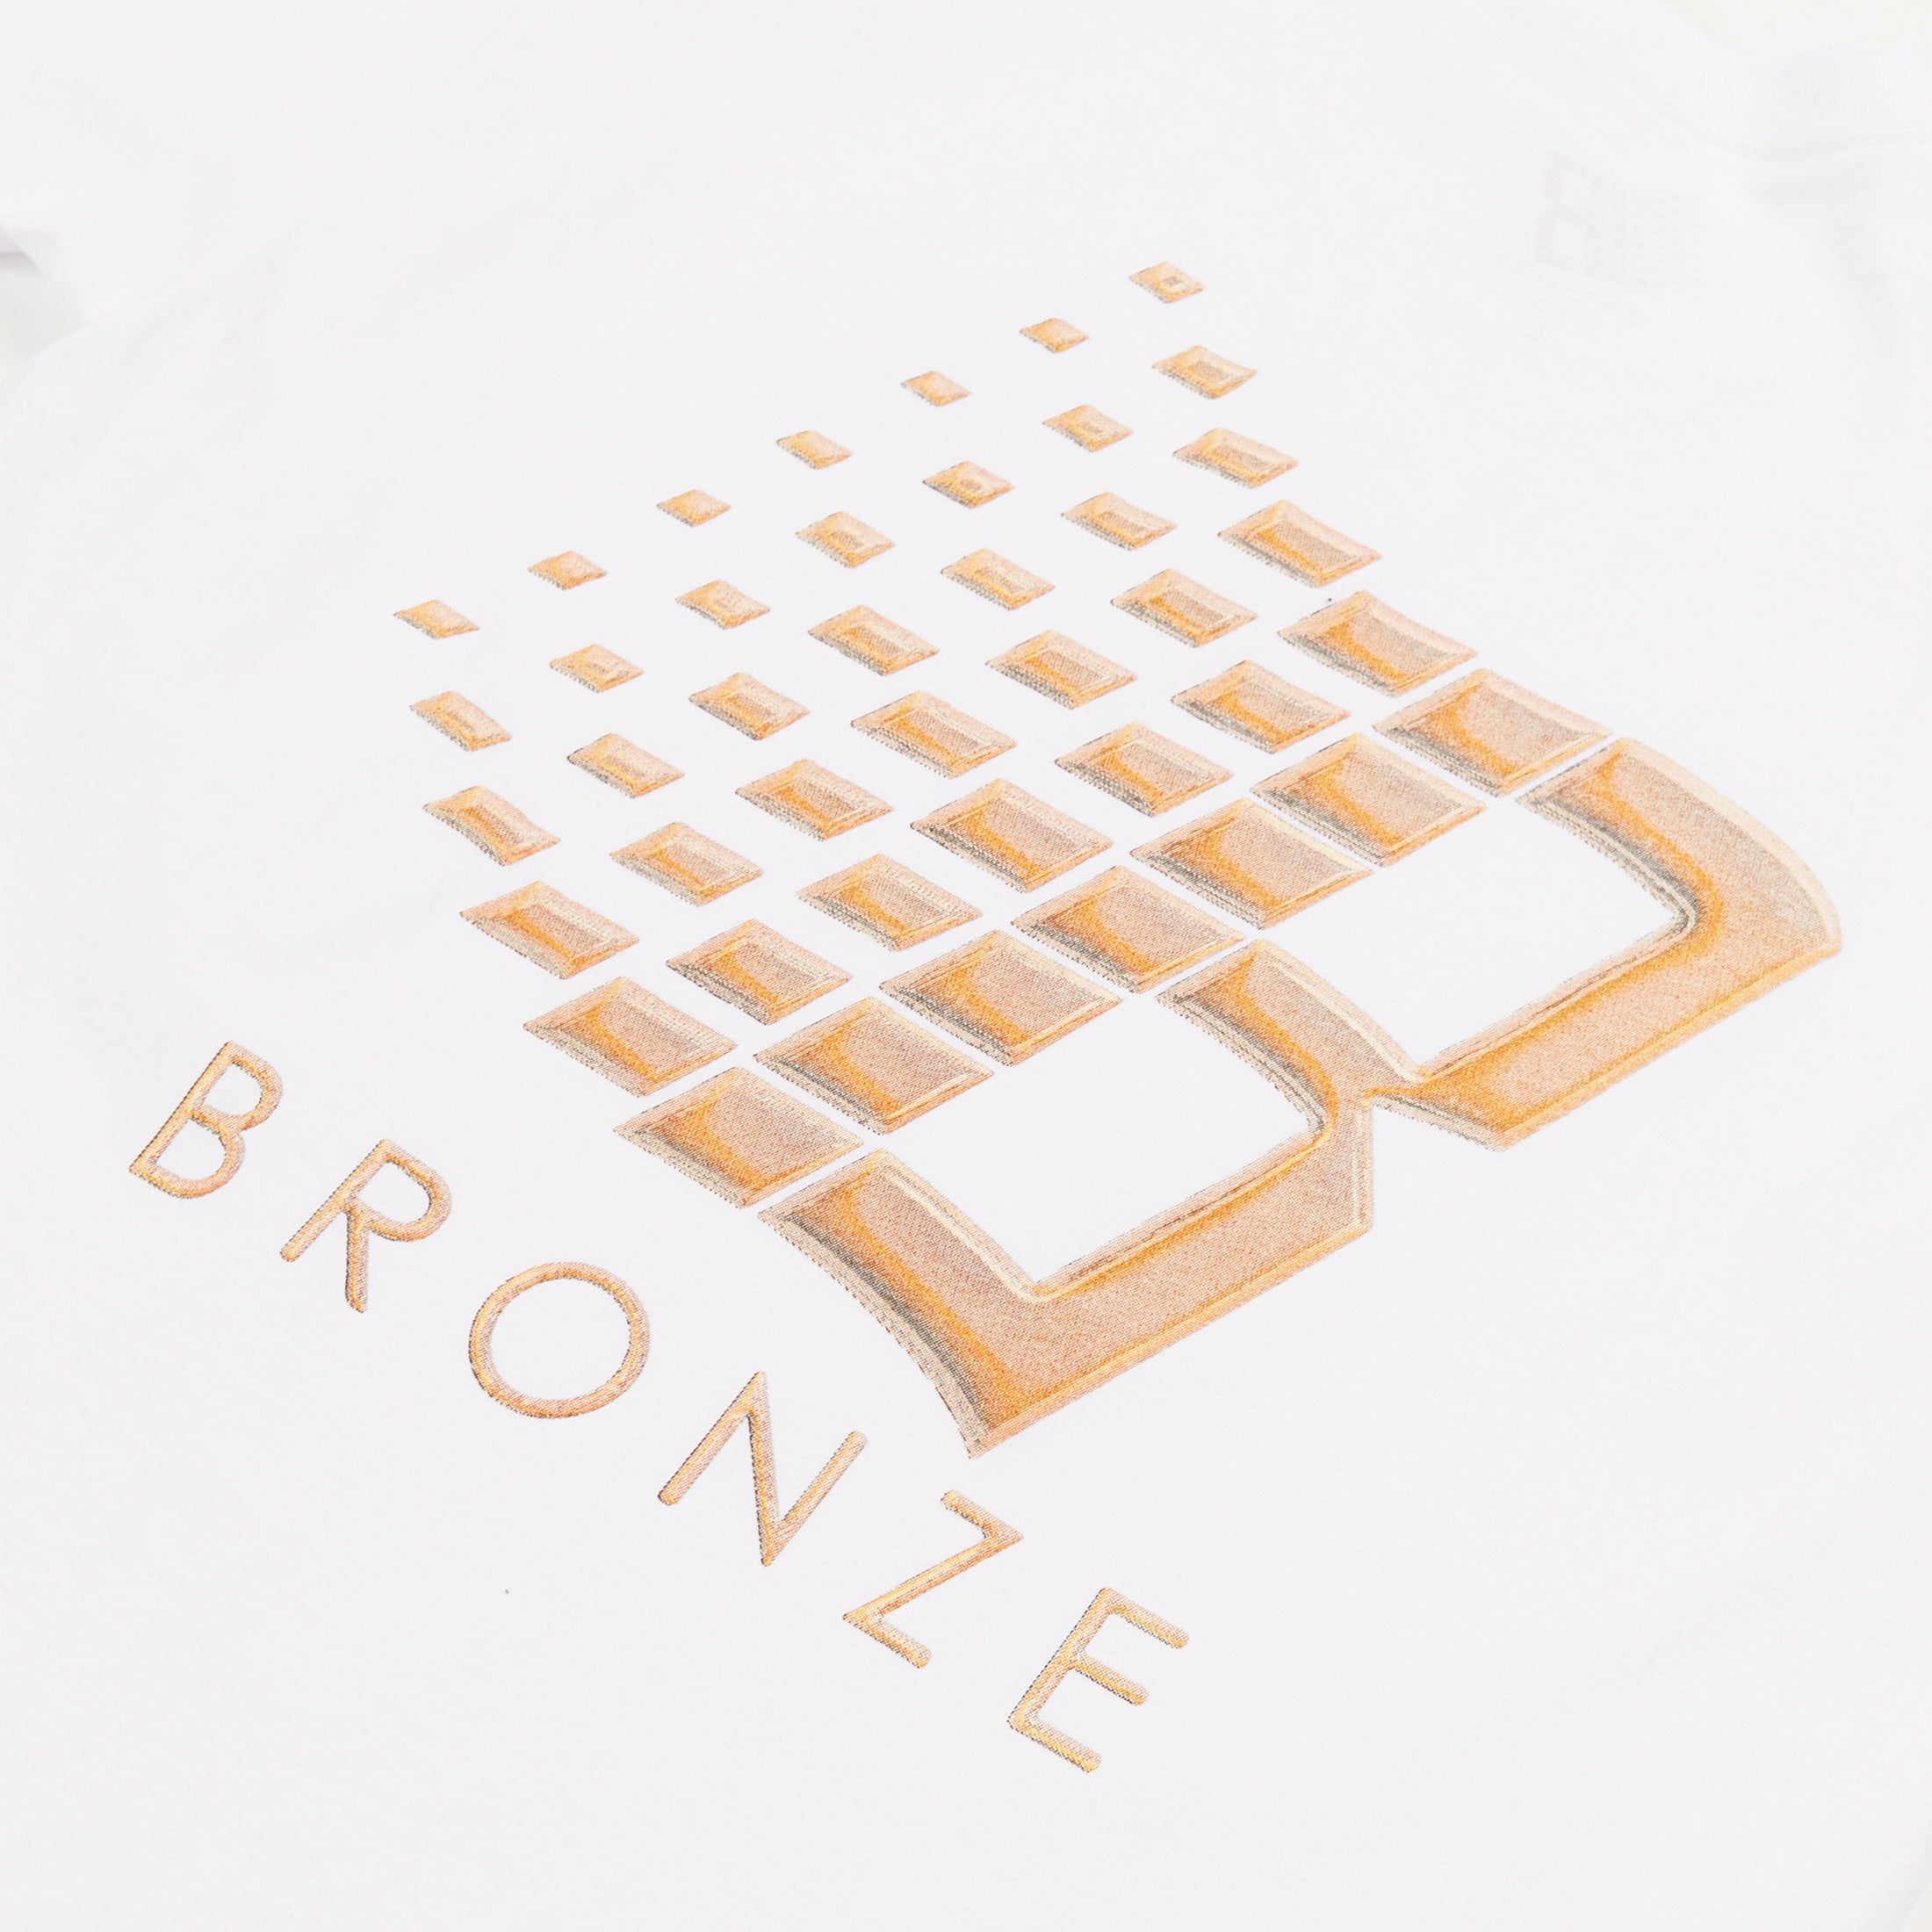 Bronze Balloon Logo T-Shirt White